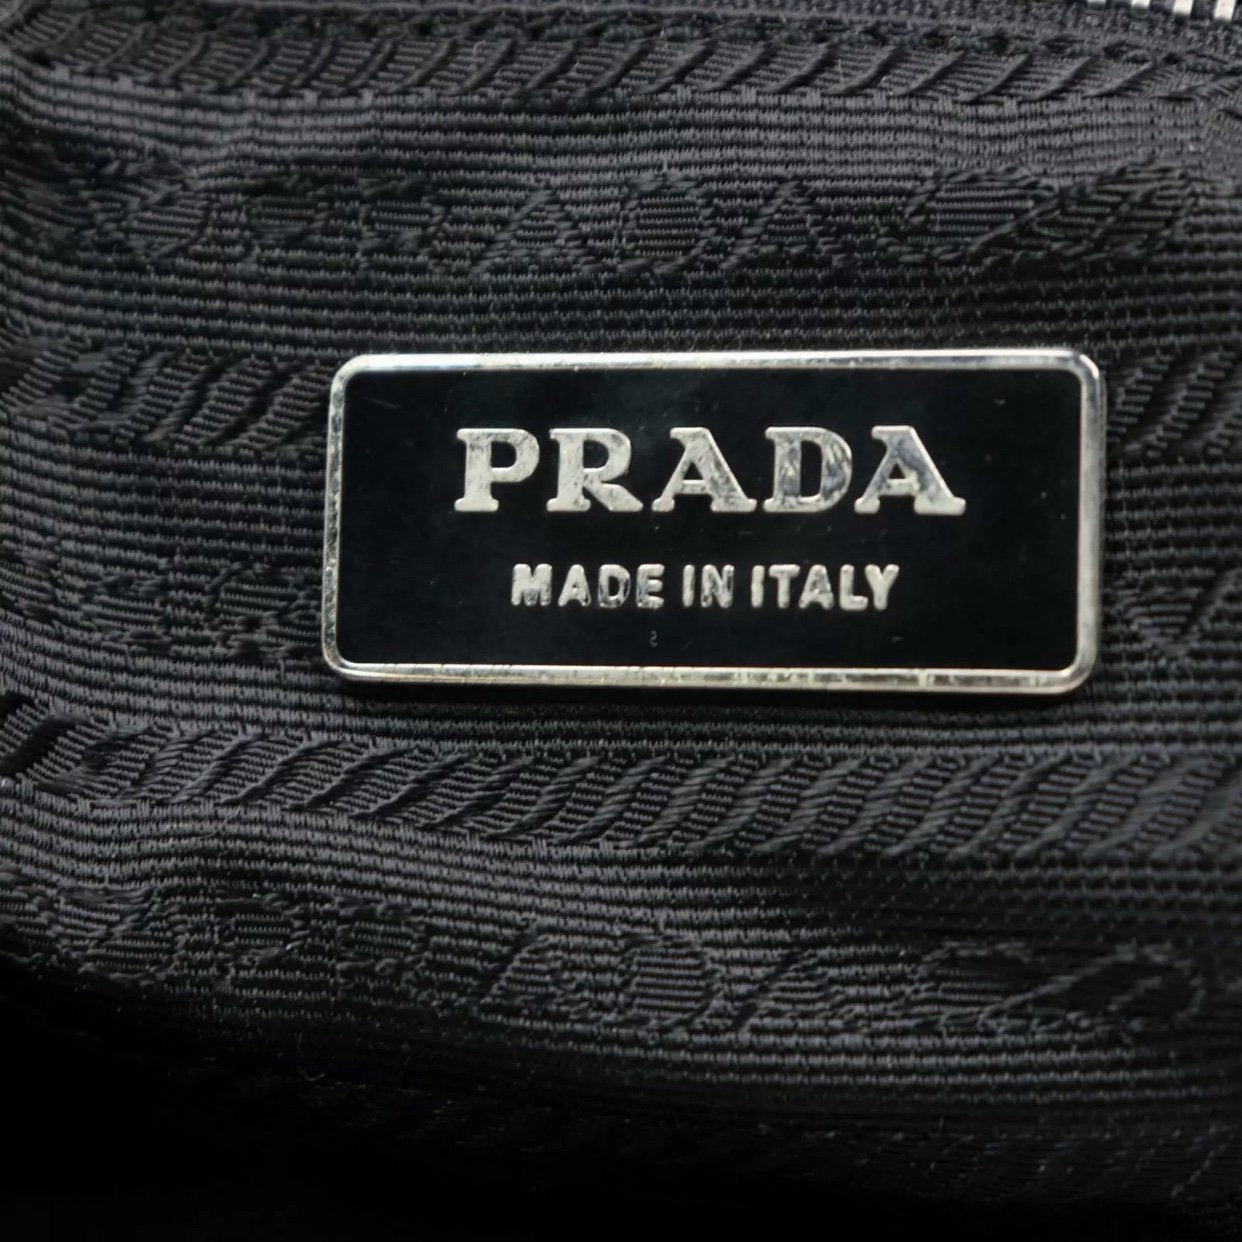 SALE! 100% Authentic Prada Bag! See Photos For Authenticity!